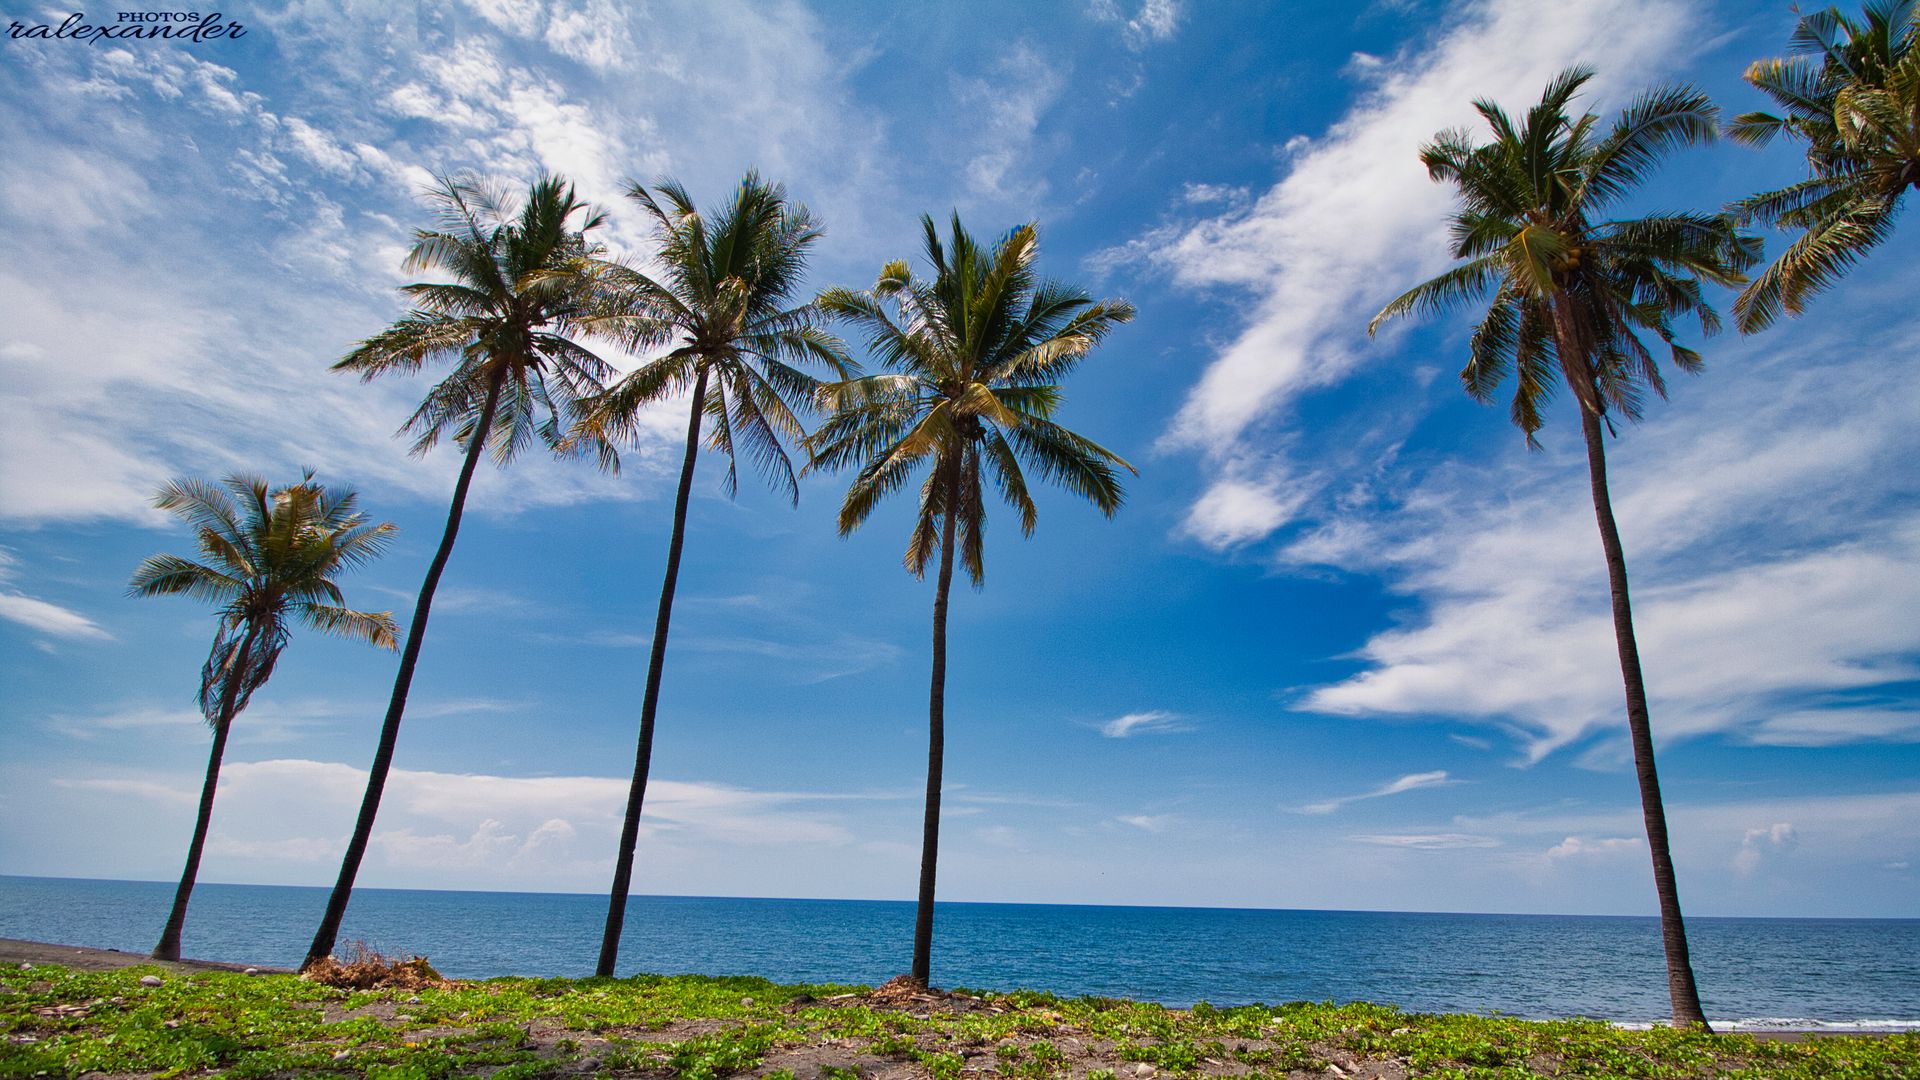 Download Wallpaper 1920x1080 Palms Trees Sea Tropics Landscape Full Hd Hdtv Fhd 1080p Hd